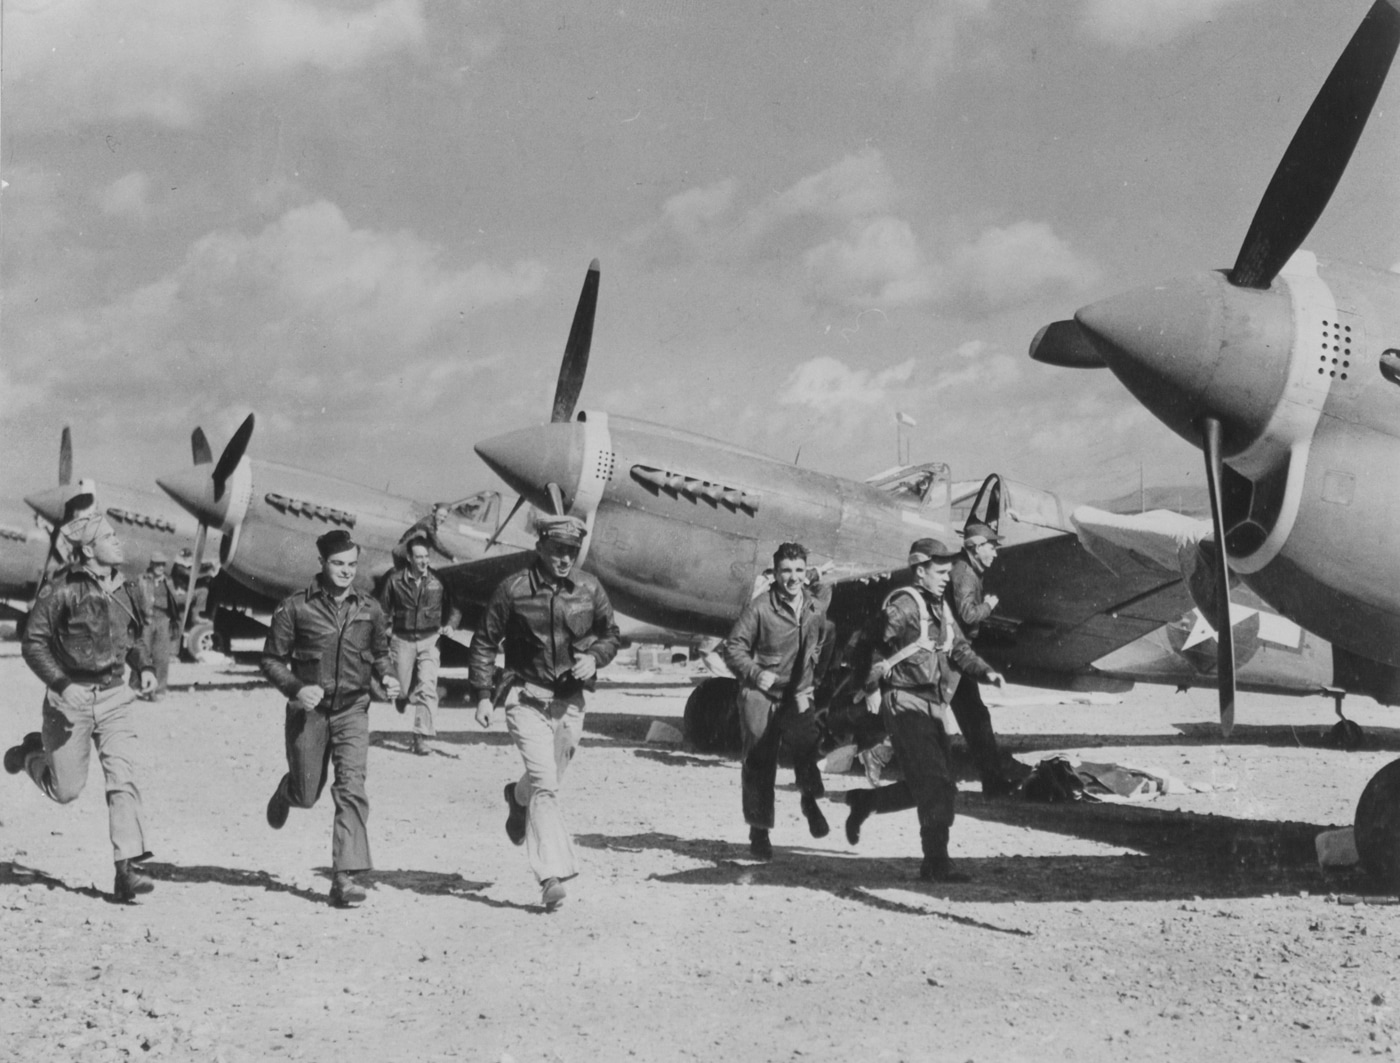 p-40 pilots scramble to meet japanese attackers